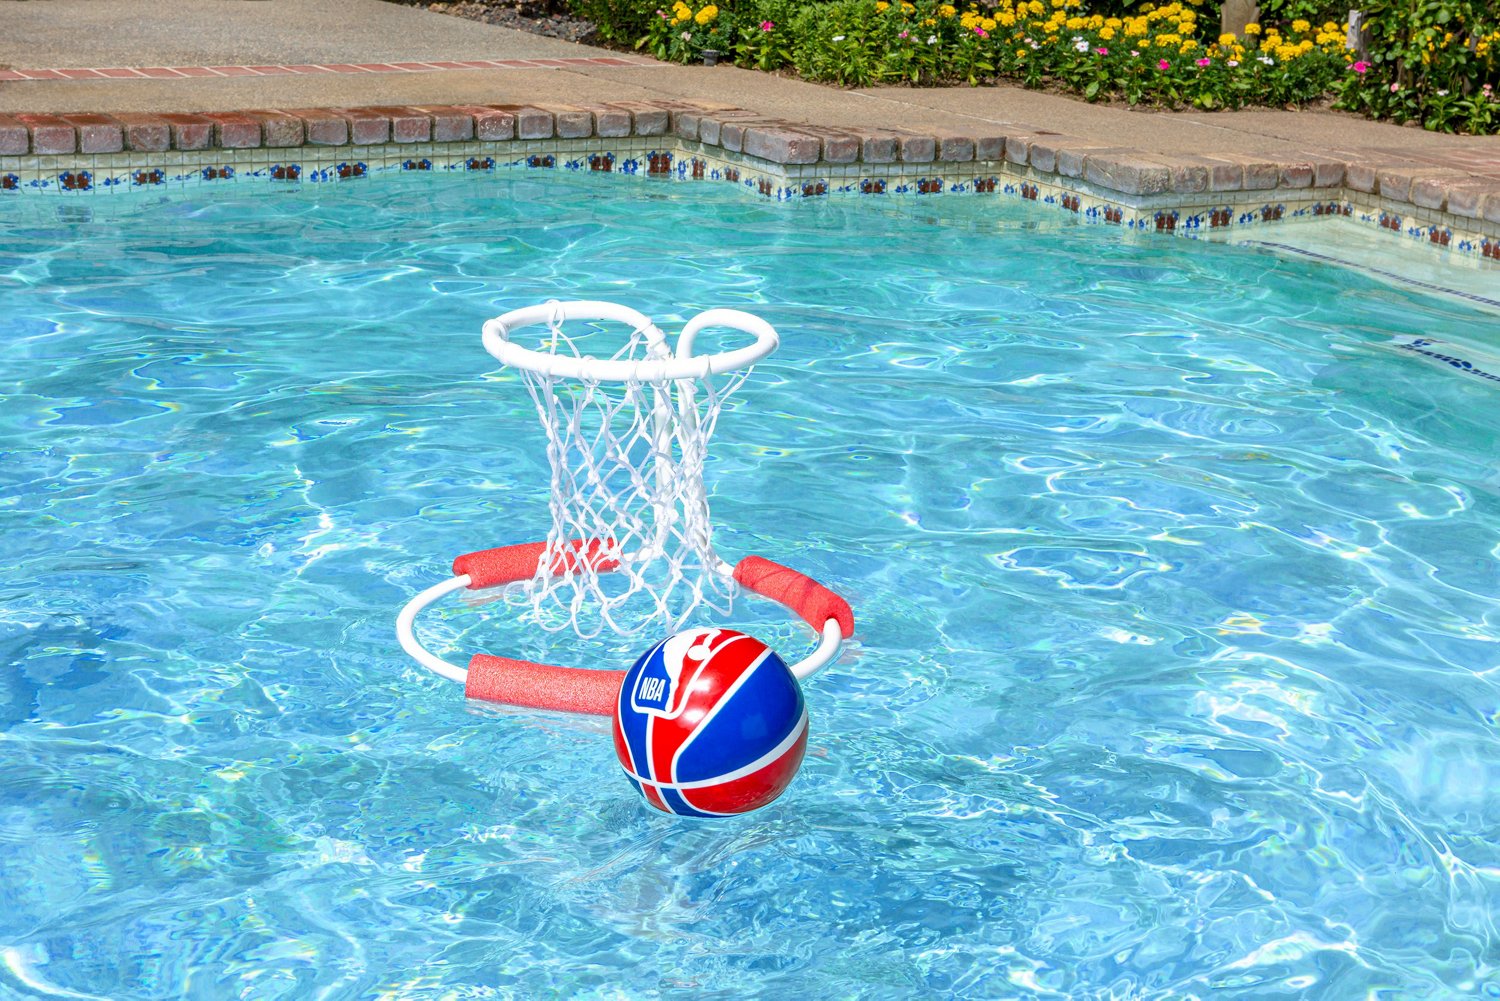 Poolmaster Nba Water Basketball Game Academy